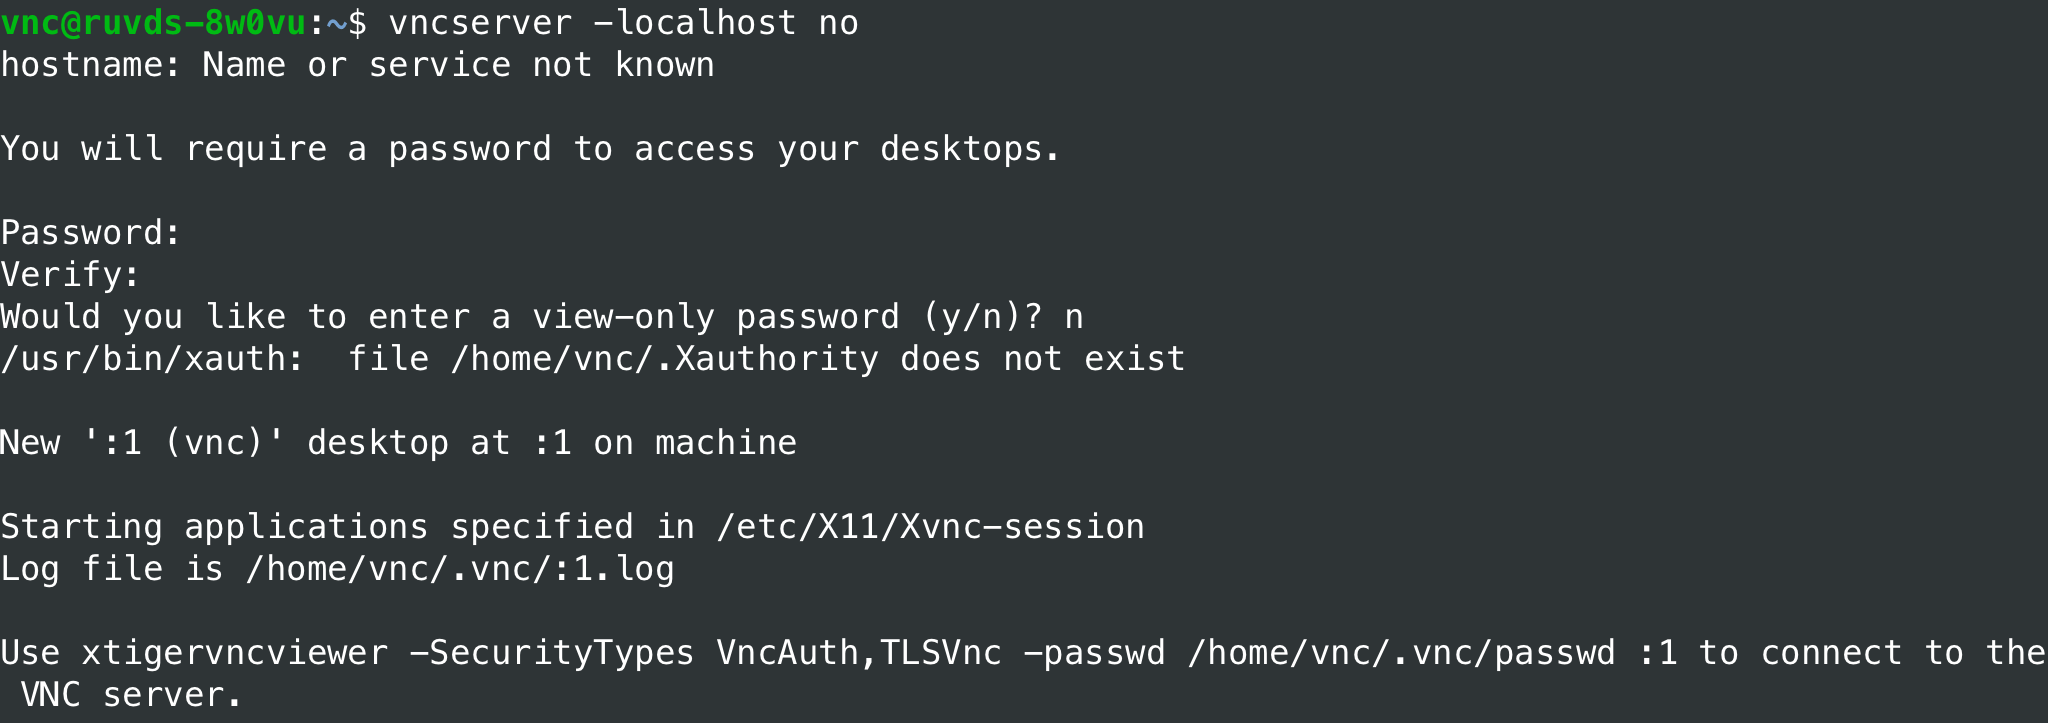 VPS на Linux с графическим интерфейсом: запускаем сервер VNC на Ubuntu 18.04 - 4